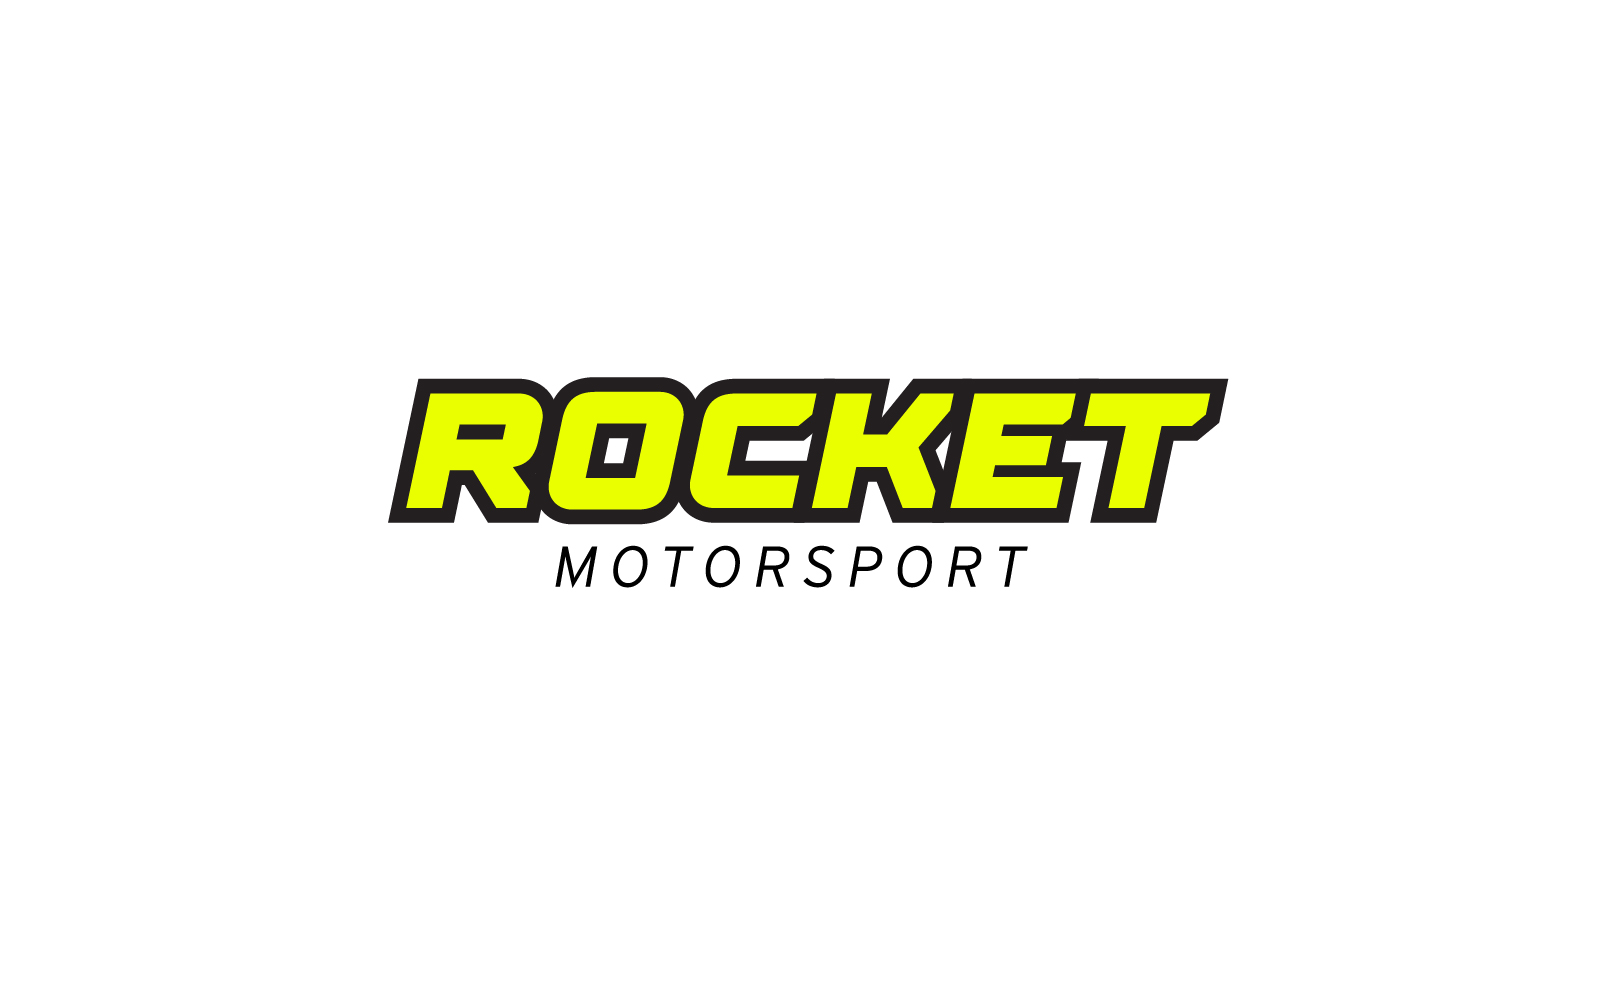 Rocket Motorsport